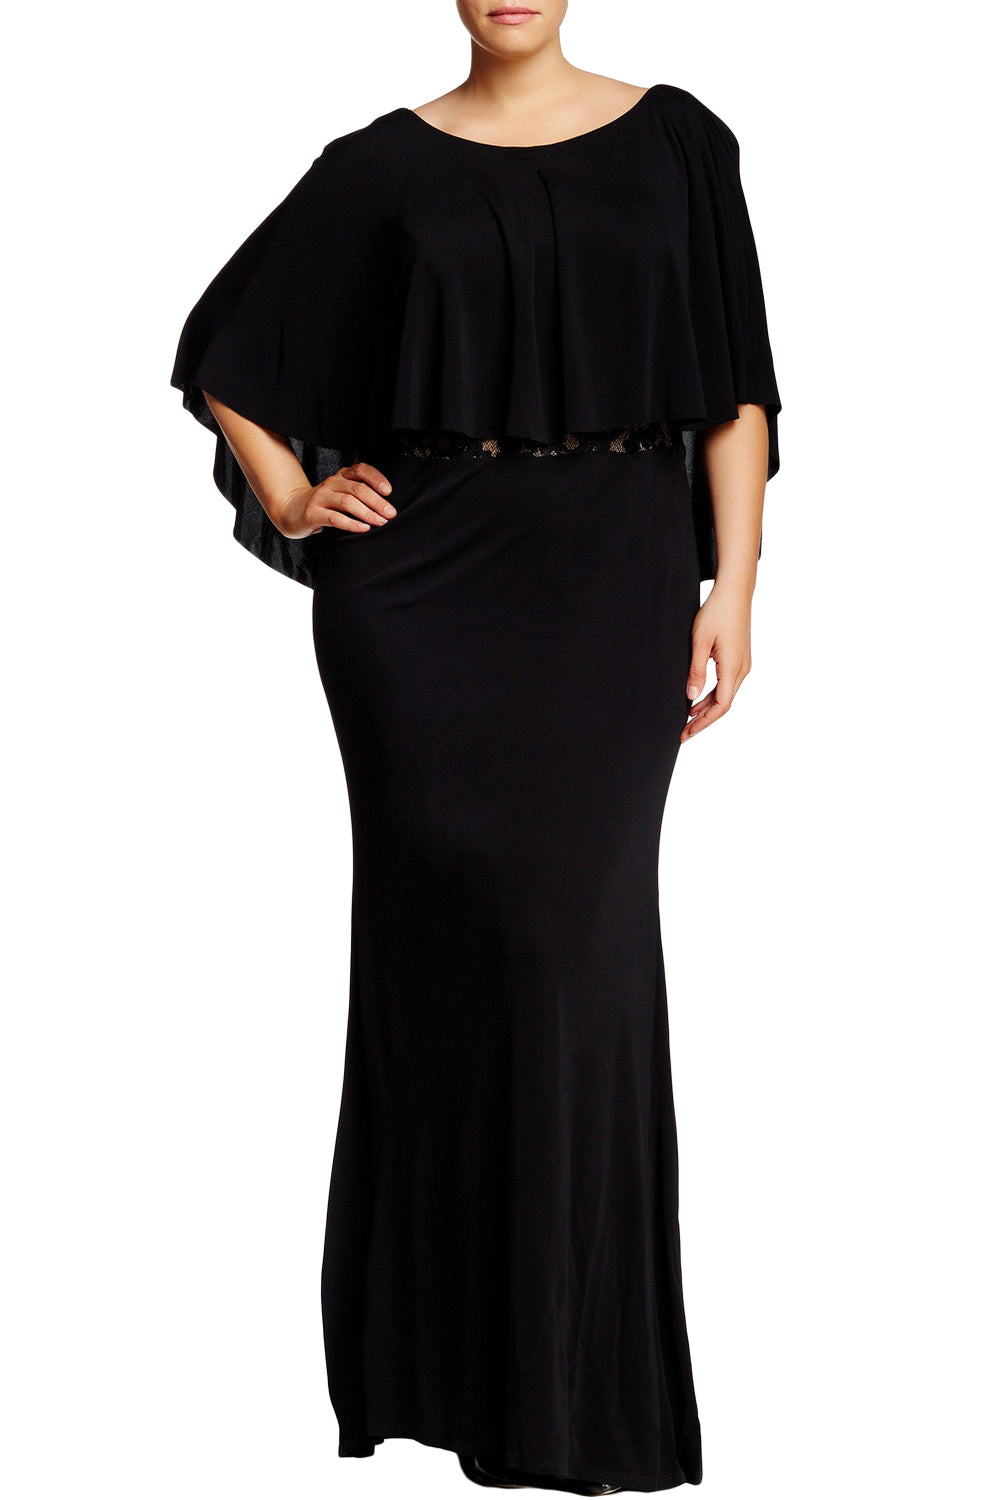 Black Cape Overlay Plus Size Dress